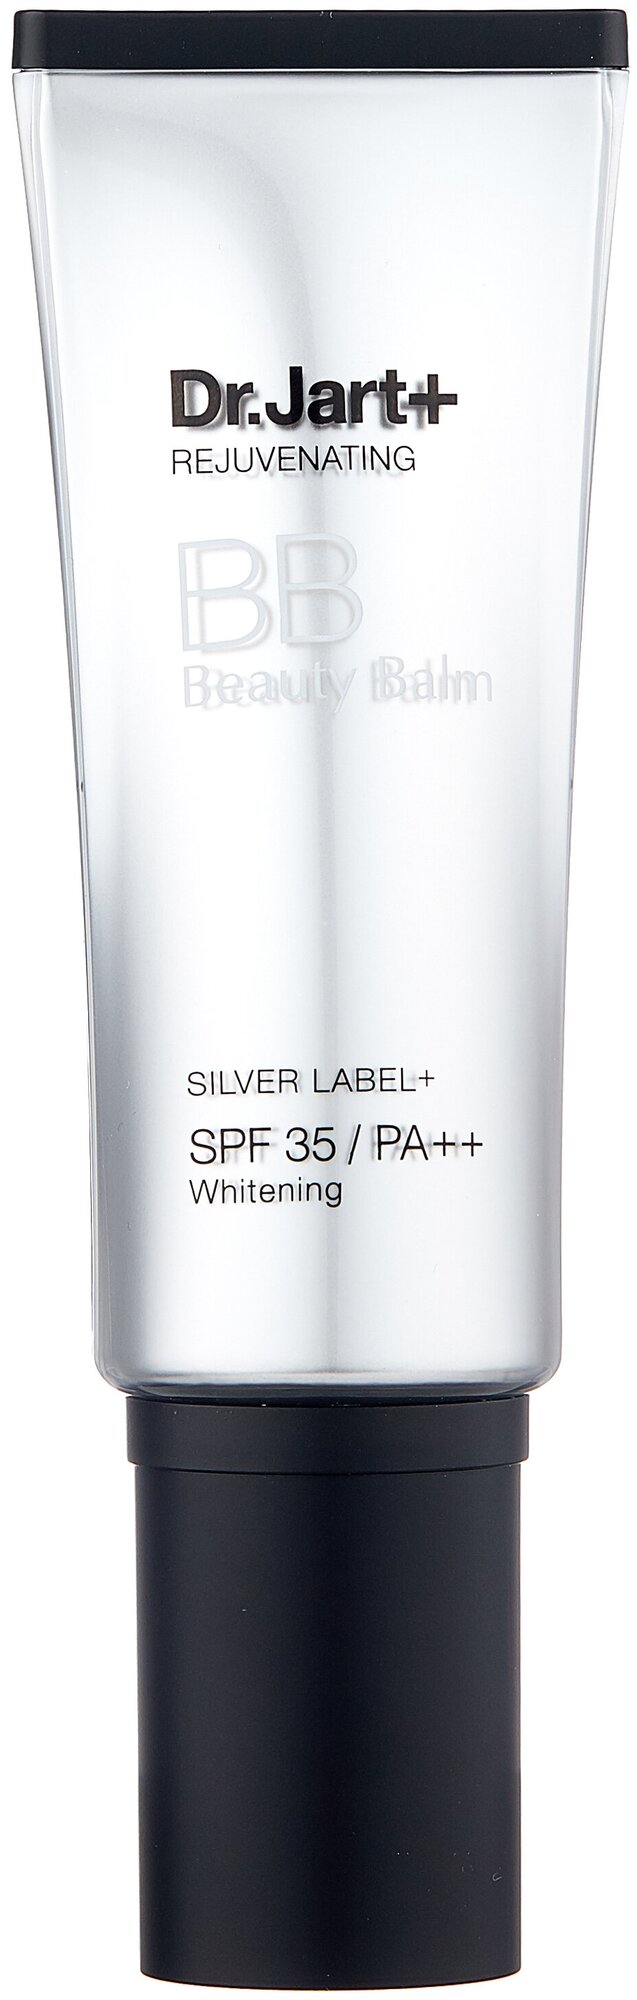 Dr. Jart+ Rejuvenating Beauty Balm Silver Label BB крем, 40 мл